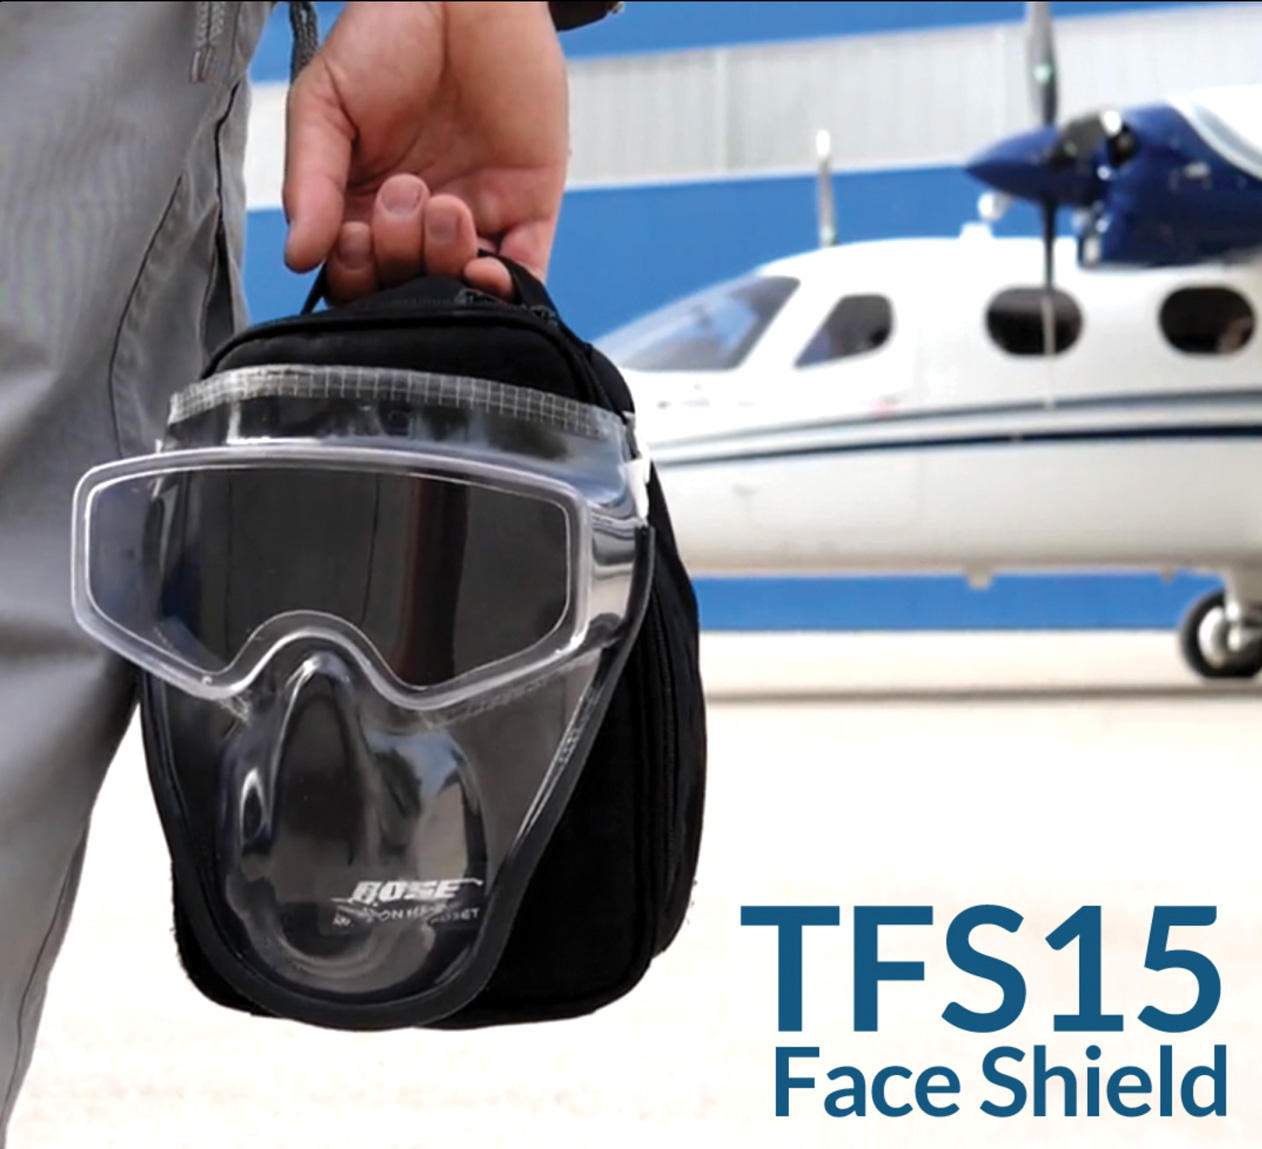 Tecnam TFS-15 XV Extra Vision Face Shield for AviationImage Id:151399